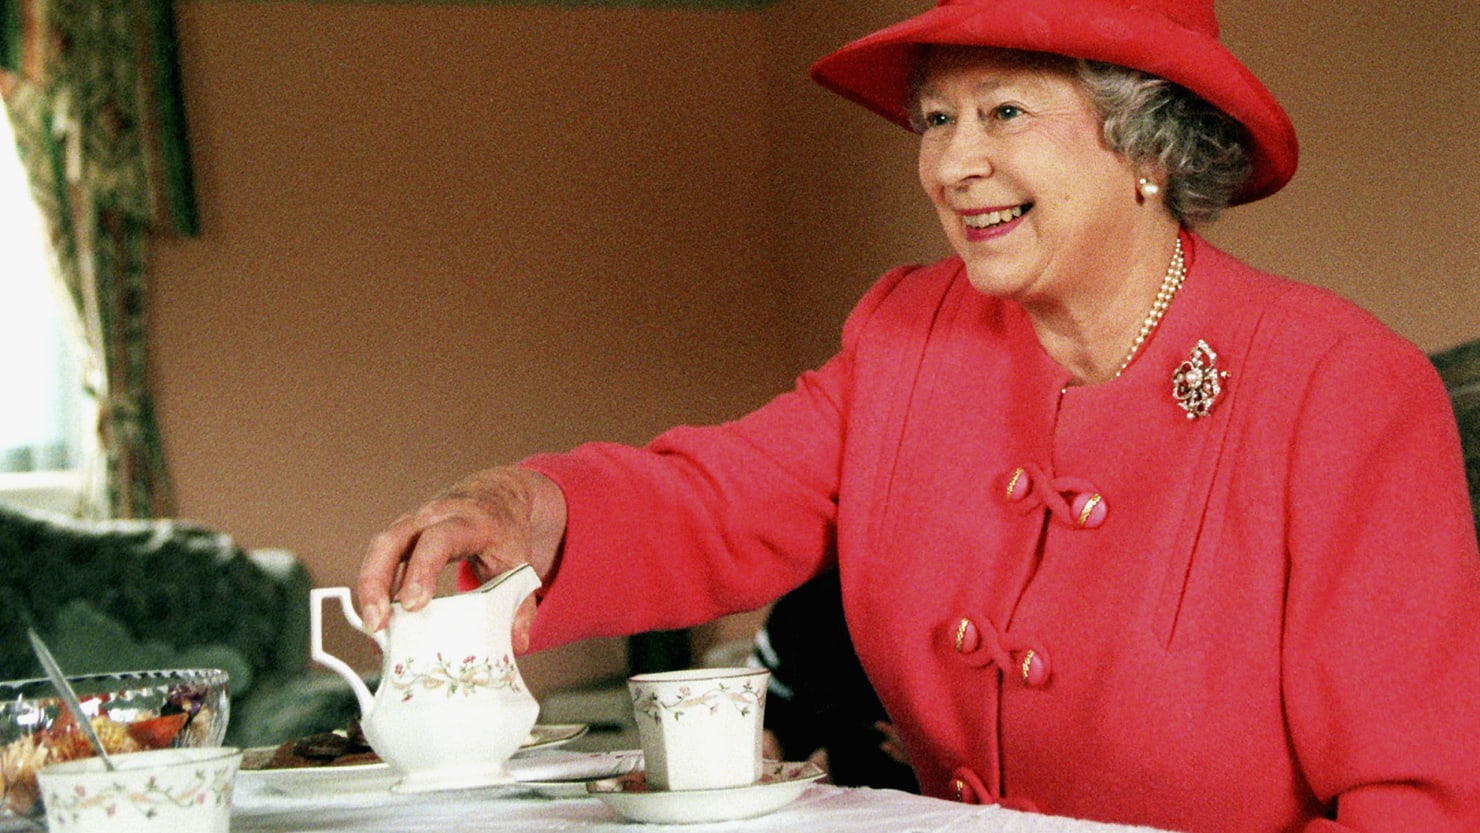 Royal Wedding Week High Tea Fit For A Queen